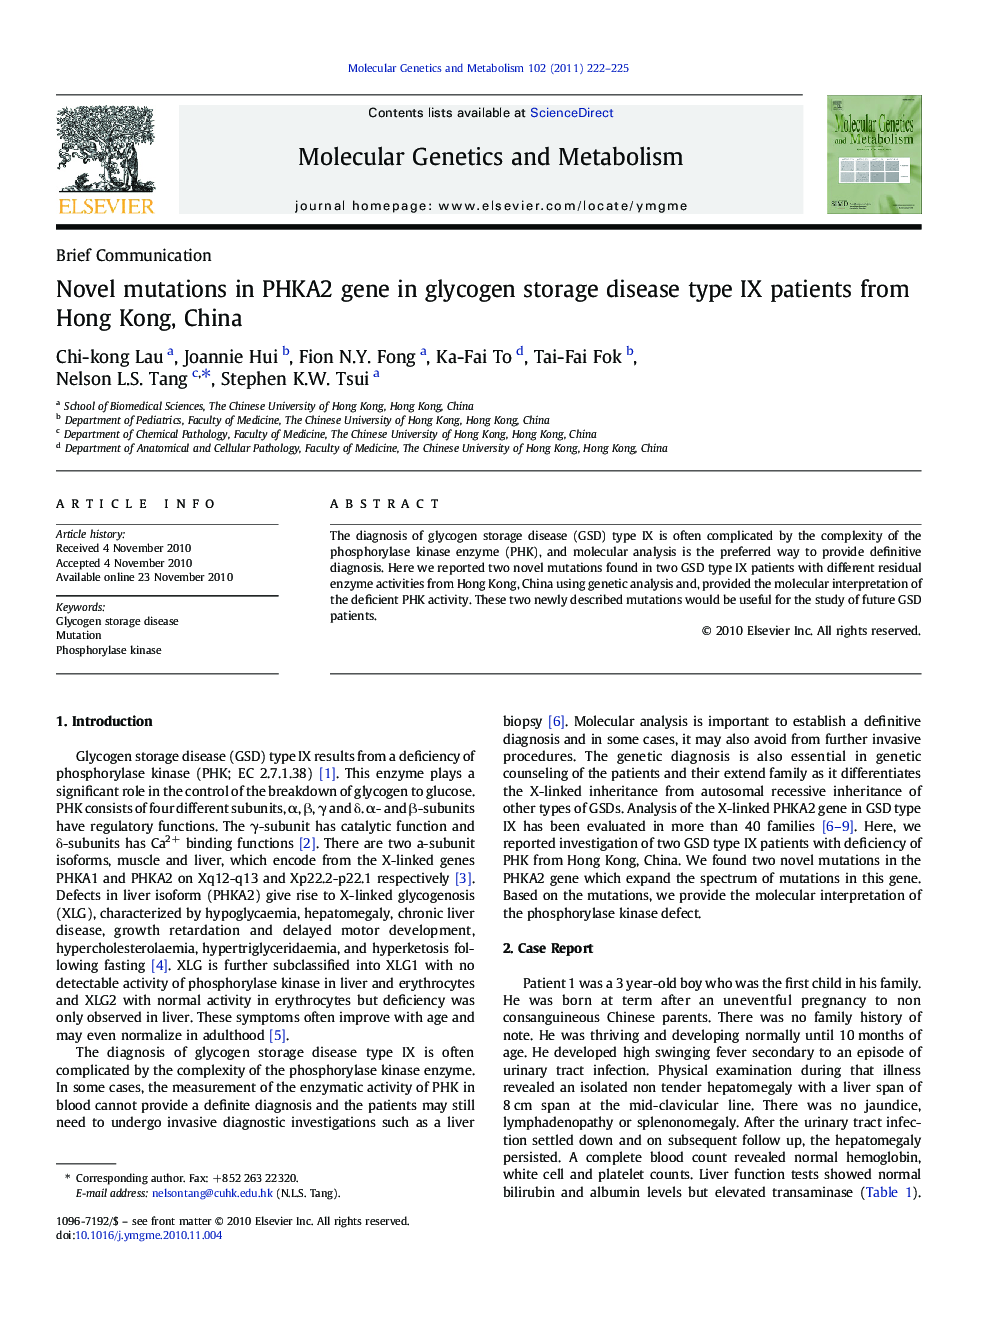 Novel mutations in PHKA2 gene in glycogen storage disease type IX patients from Hong Kong, China